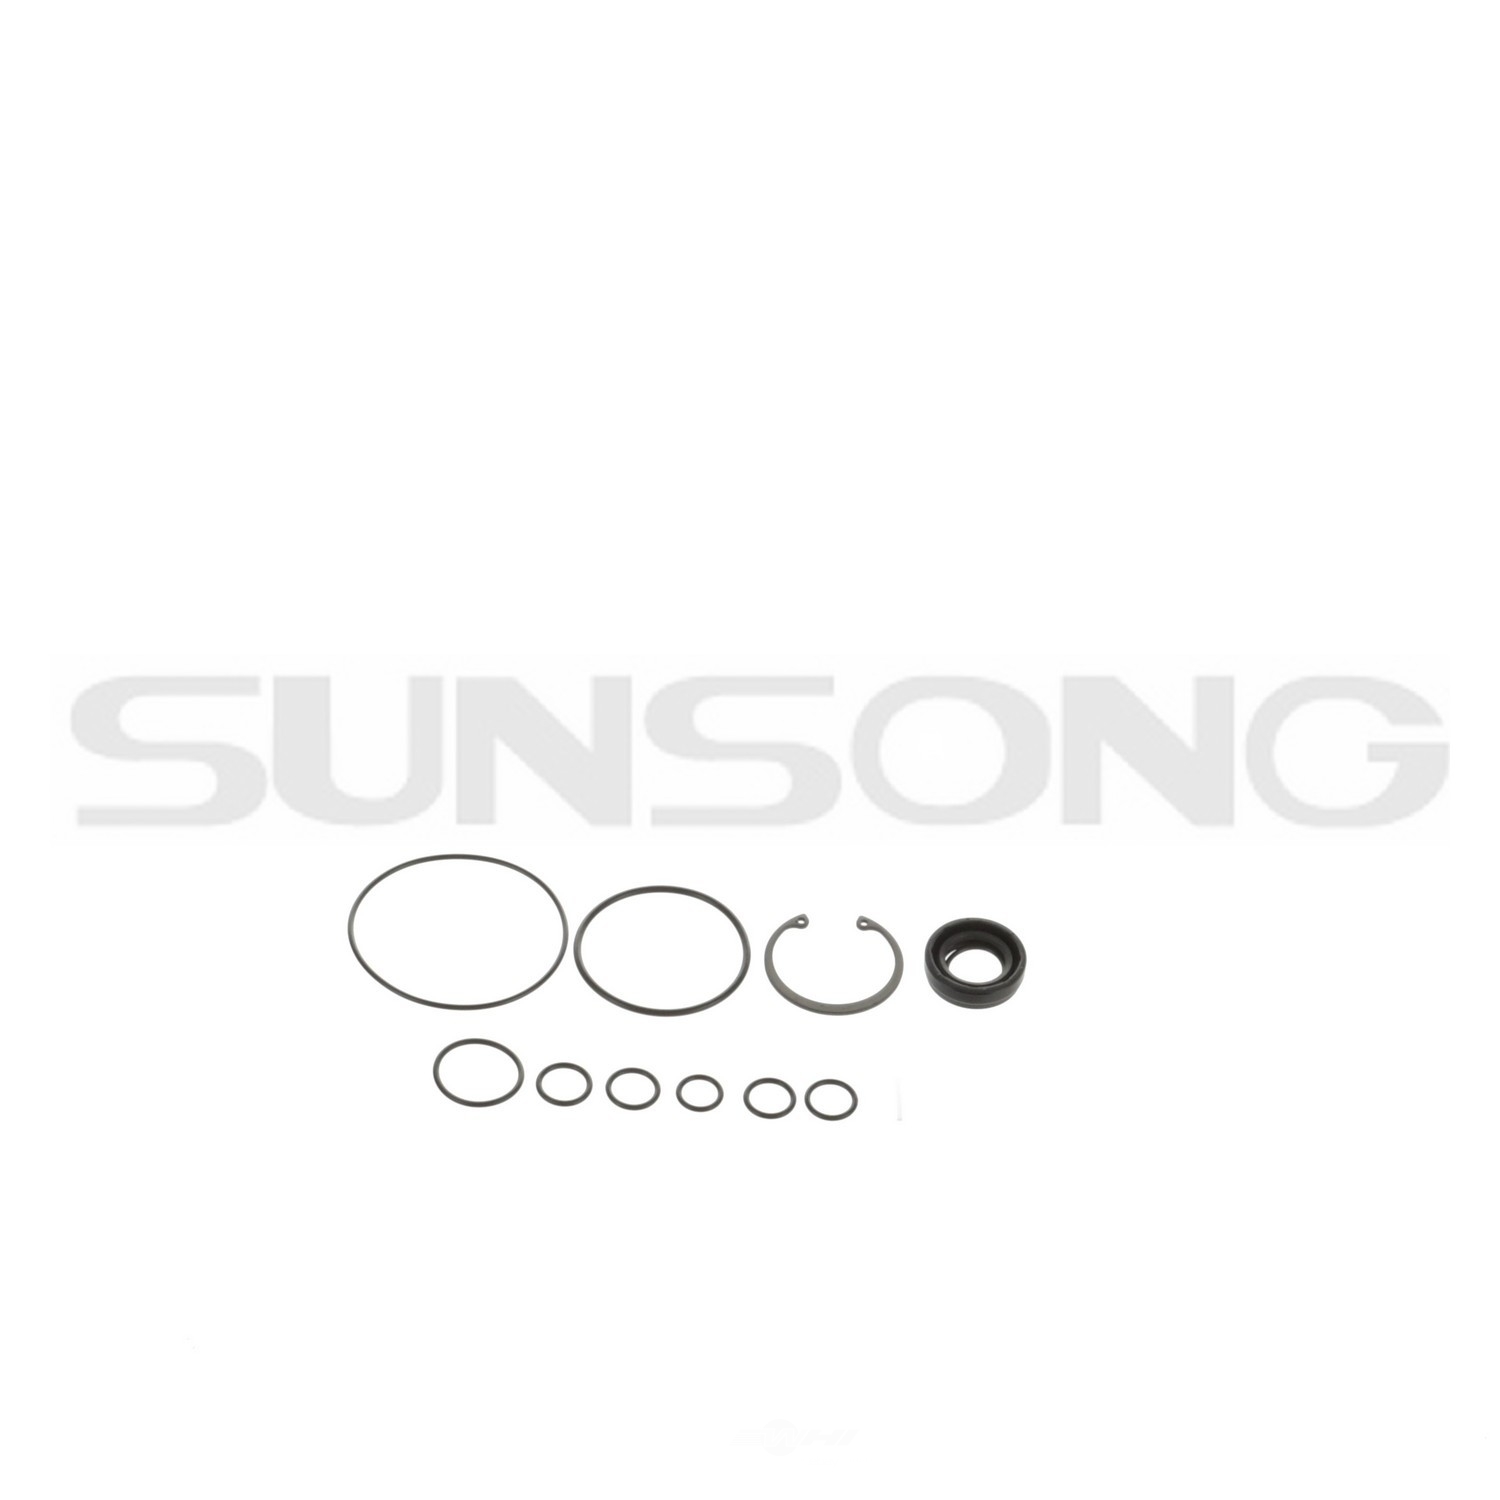 SUNSONG NORTH AMERICA - Power Steering Pump Seal Kit - SUG 8401625